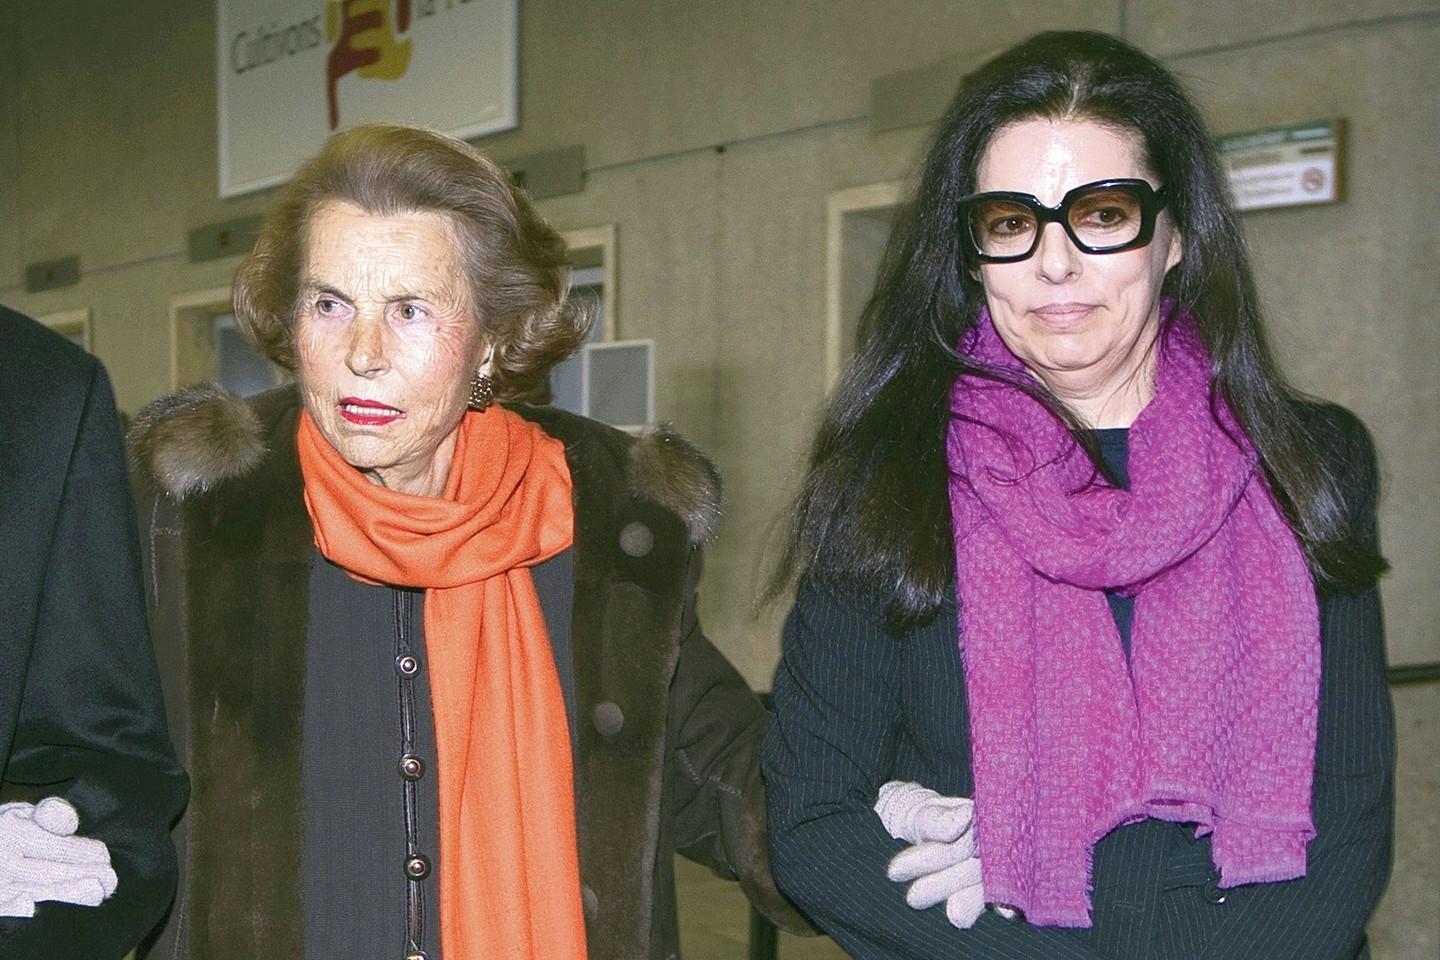 L.Bettencourt santykiai su dukra F.Bettencourt Meyers (dešinėje) buvo banguoti. <br>„Reuters“/„Scanpix“ nuotr.